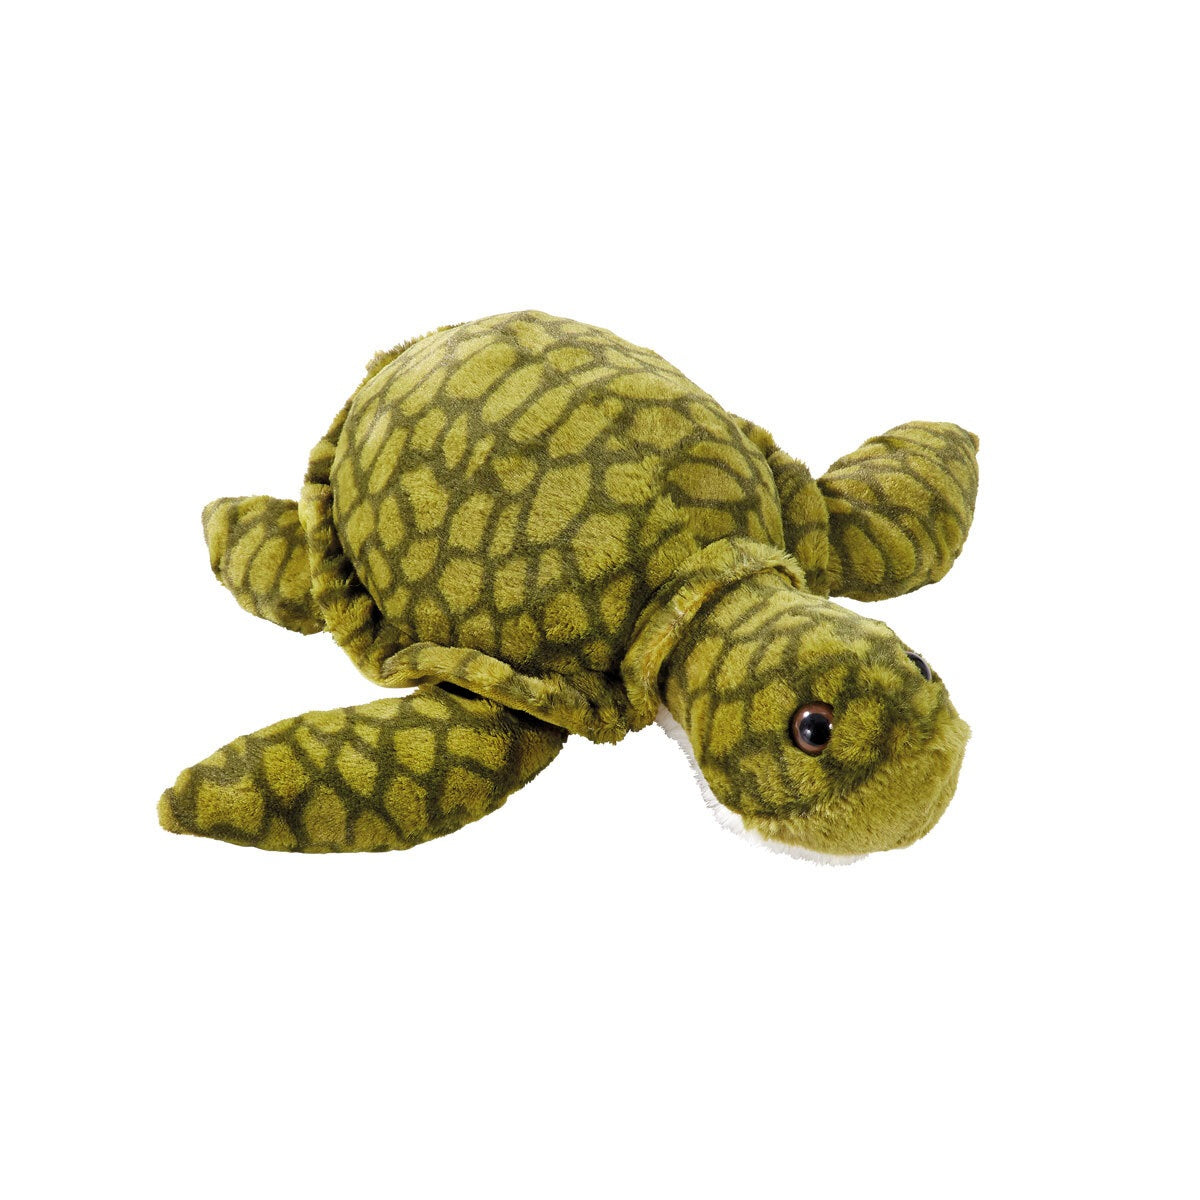 Snuggle Buddies 43cm Endangered Animals Plush Toy - Turtle